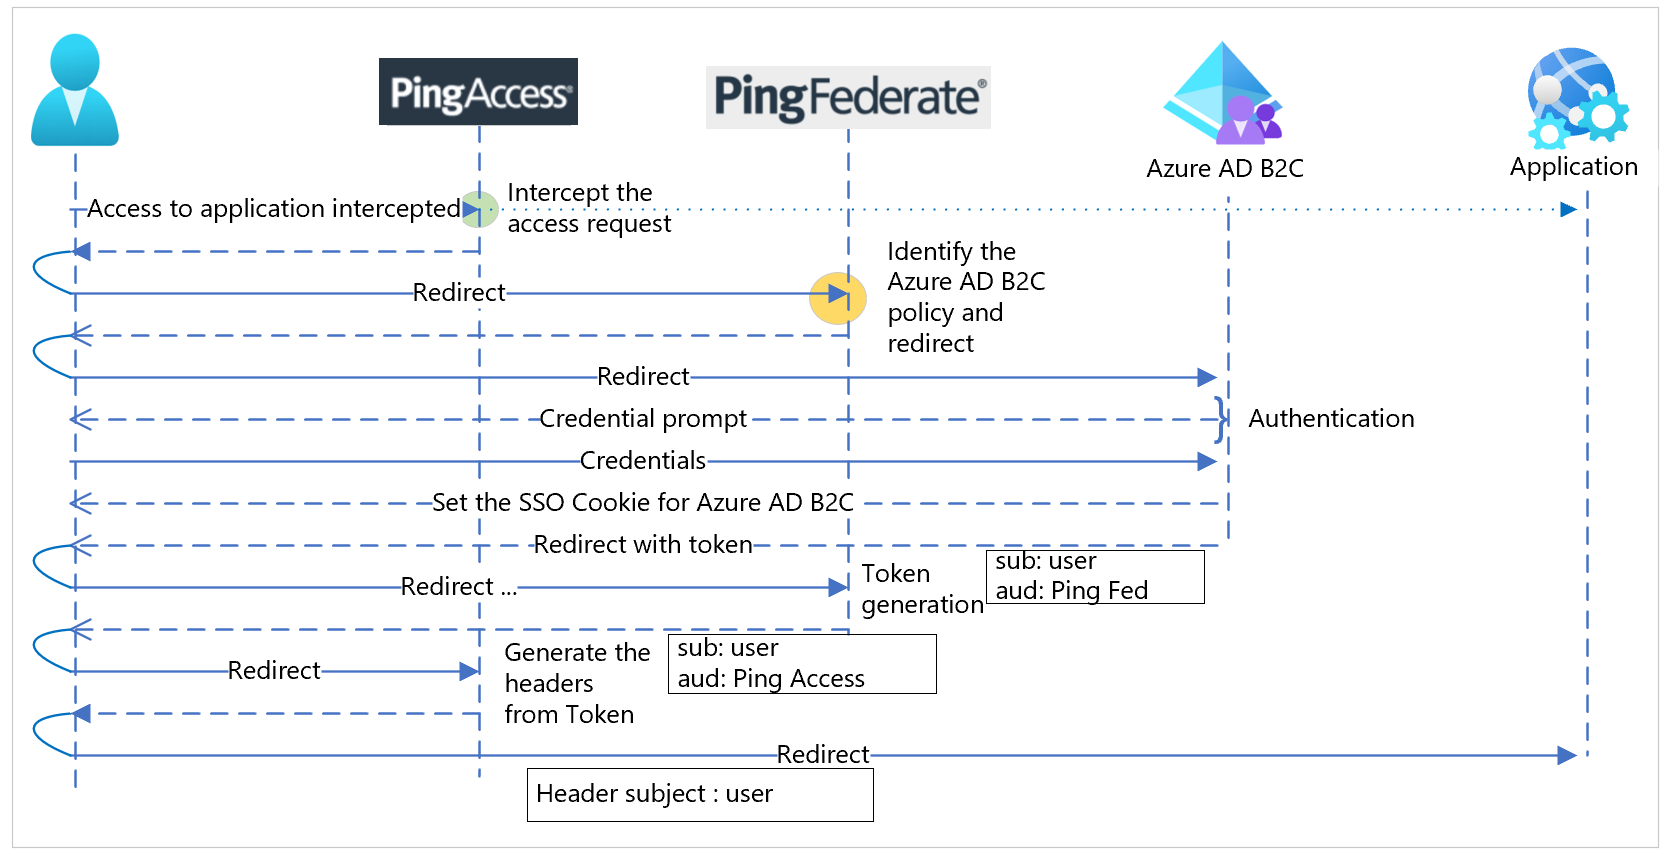 PingAccess、PingFederate、Azure AD B2C 和应用程序的协议序列流的示意图。